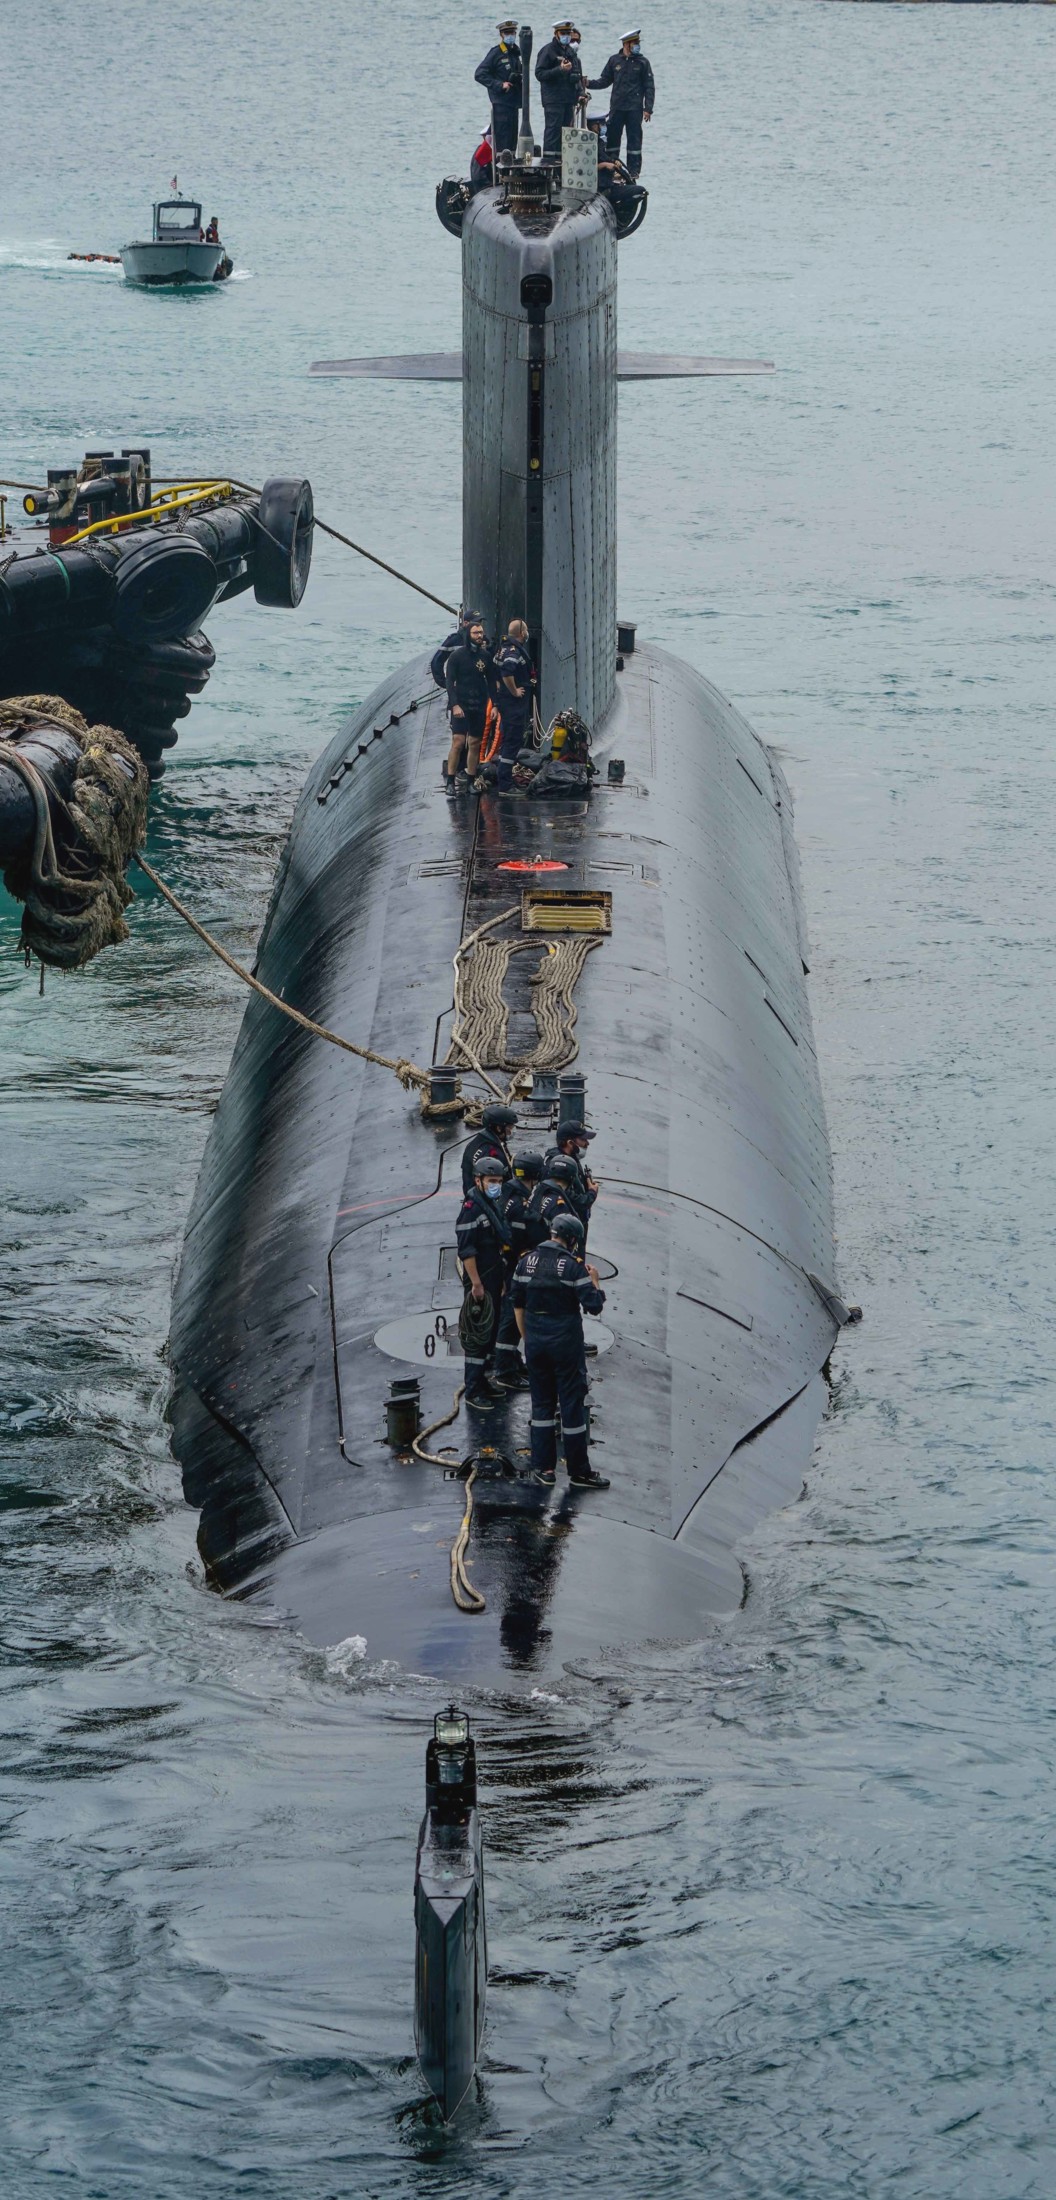 s-604 emeraude rubis class attack submarine ssn french navy marine nationale sna 06